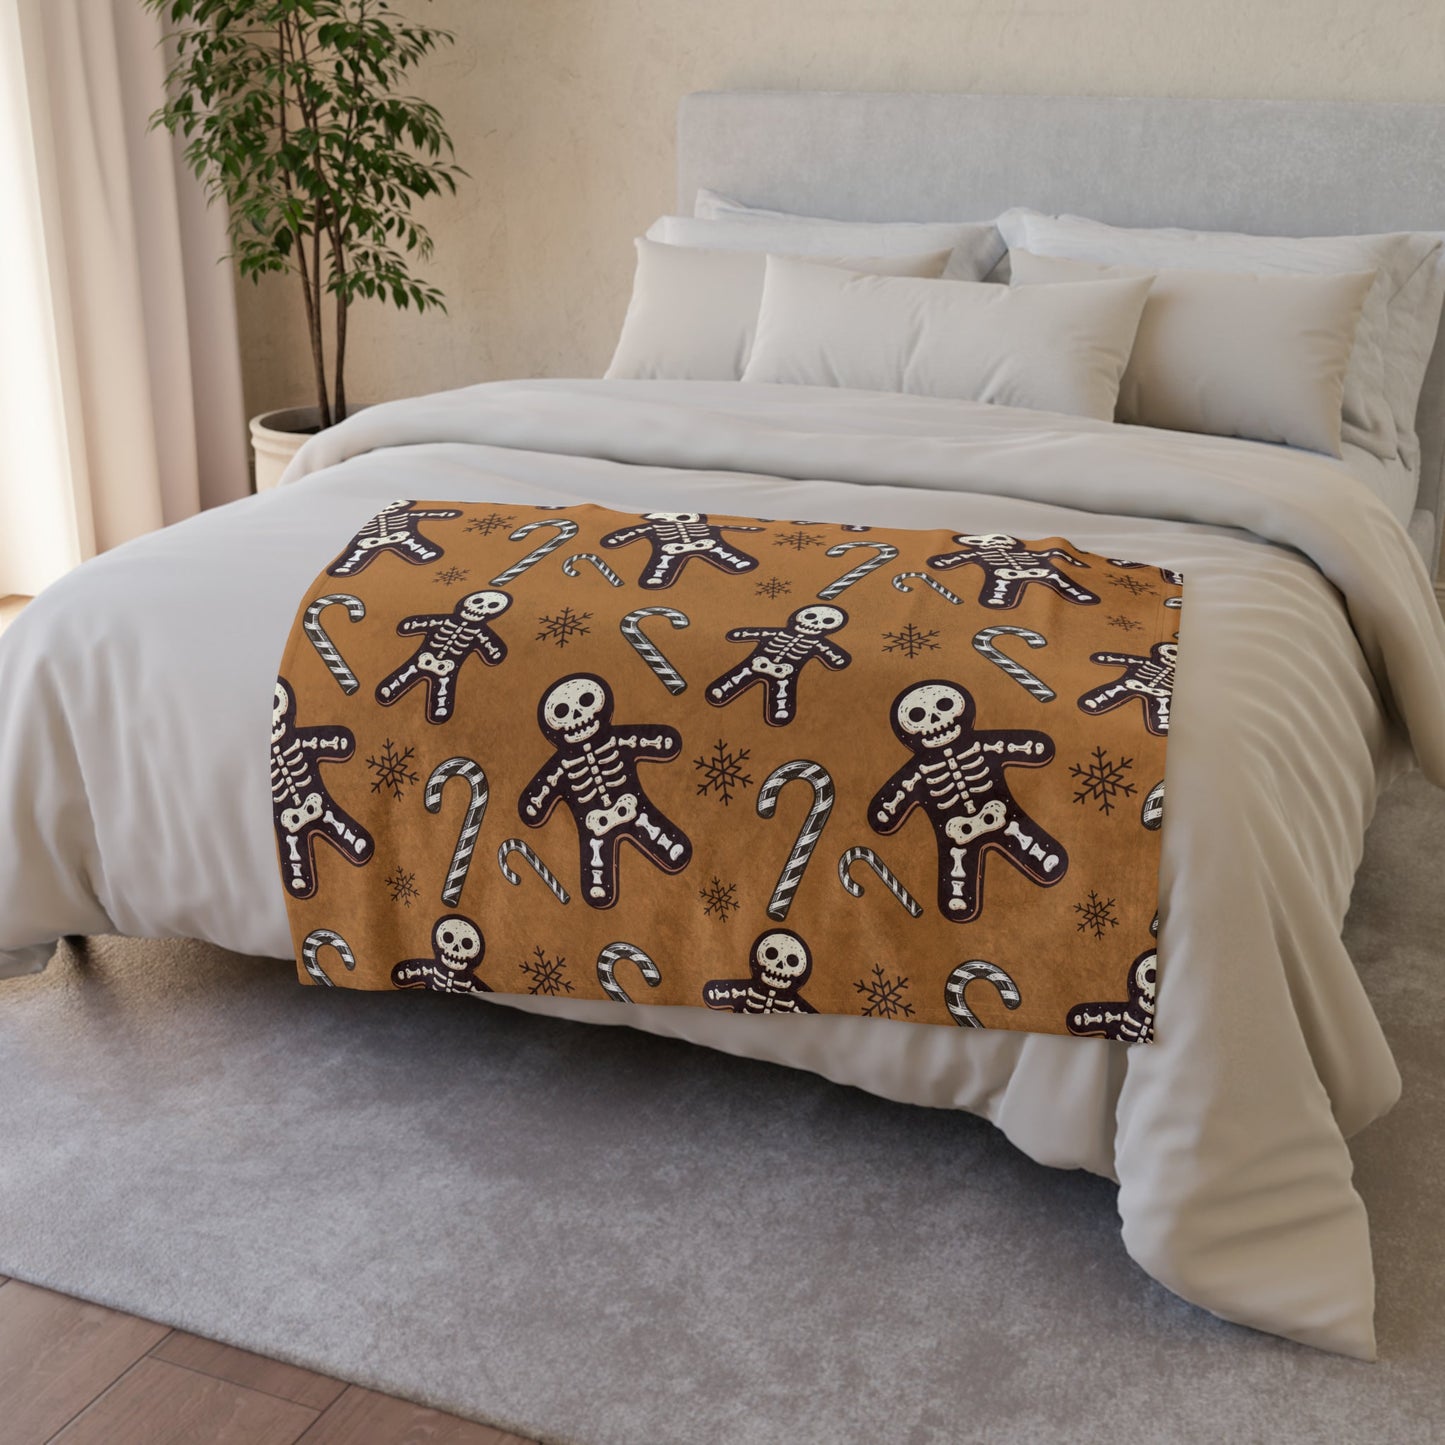 Skeleton Gingerbread Man BlanketHome DecorVTZdesigns30'' × 40''BedBeddingblack